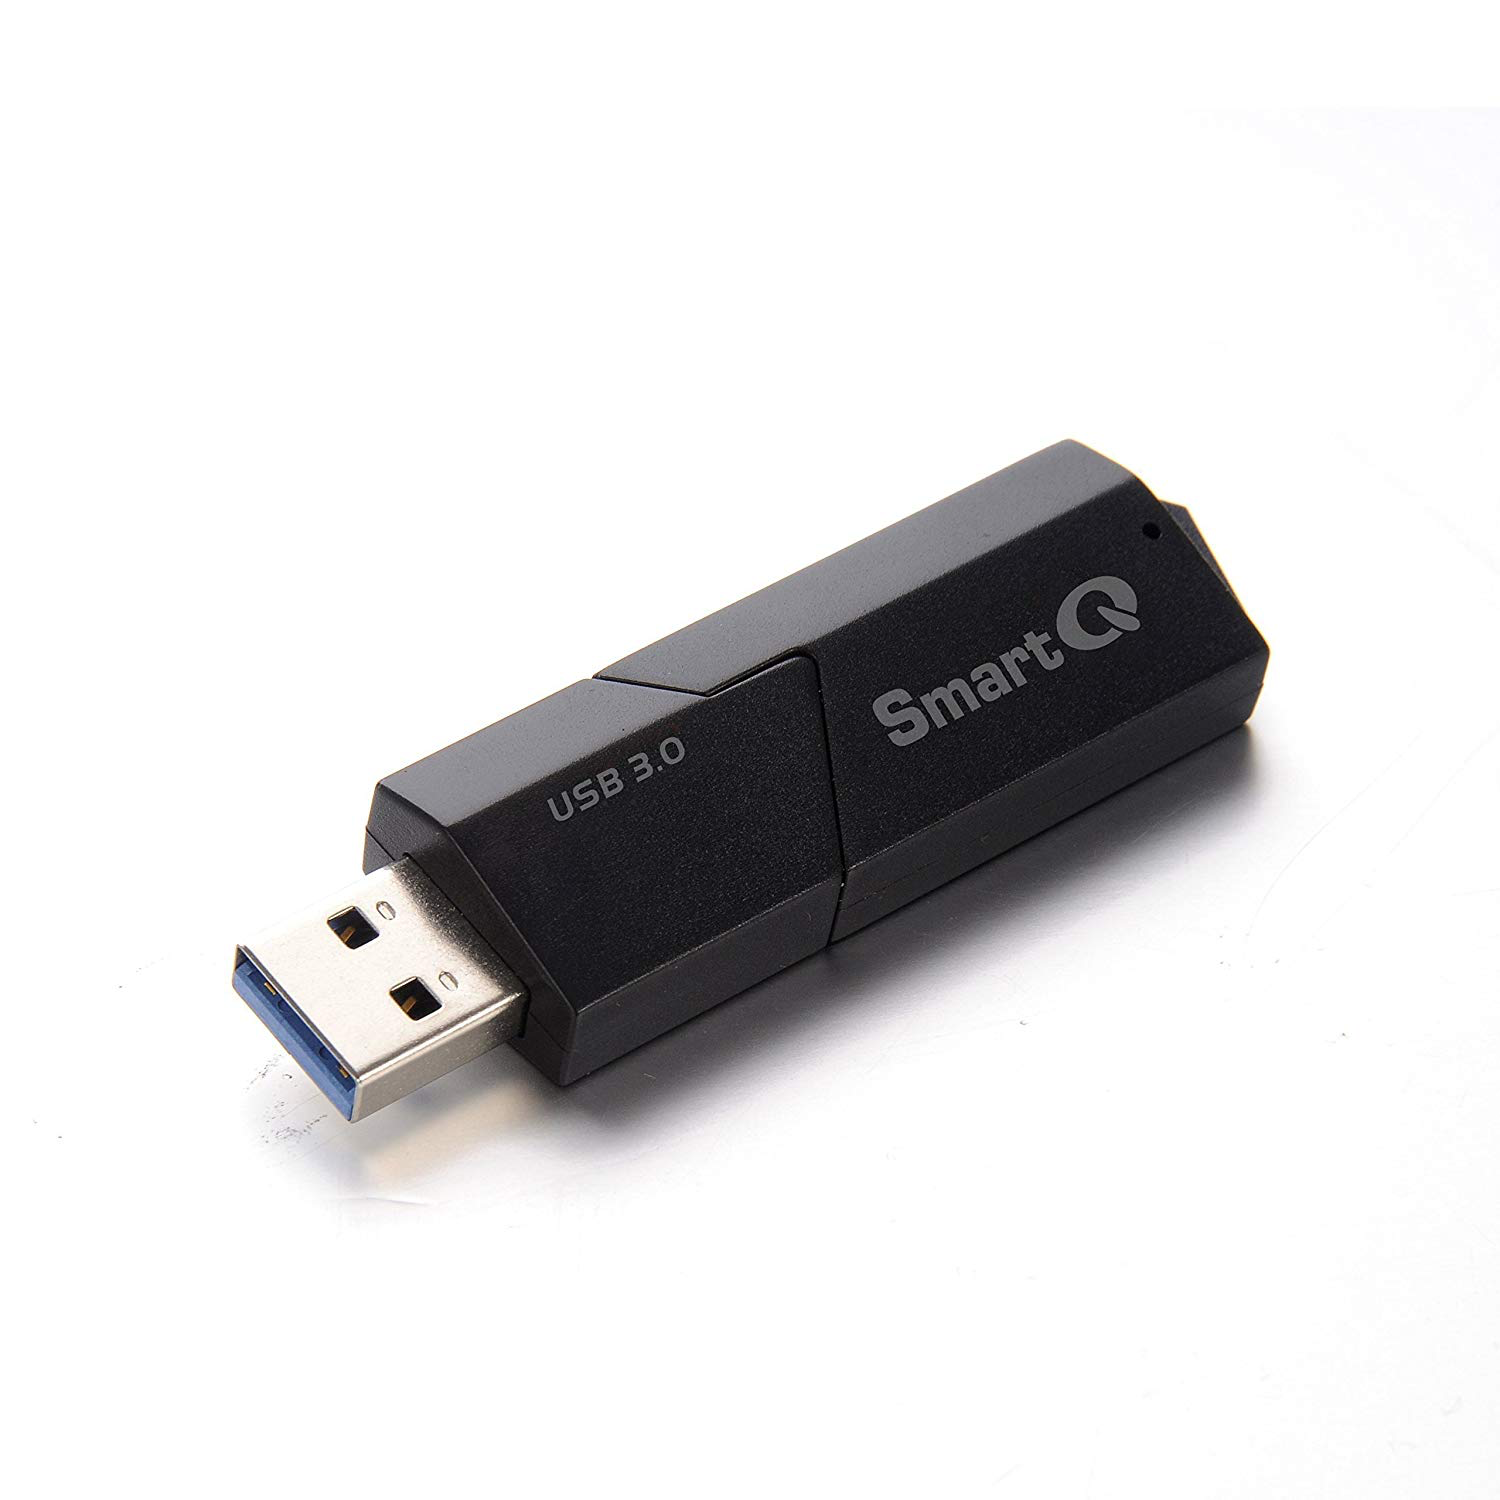 SmartQ C307 USB 3.0 Portable Memory Card Reader